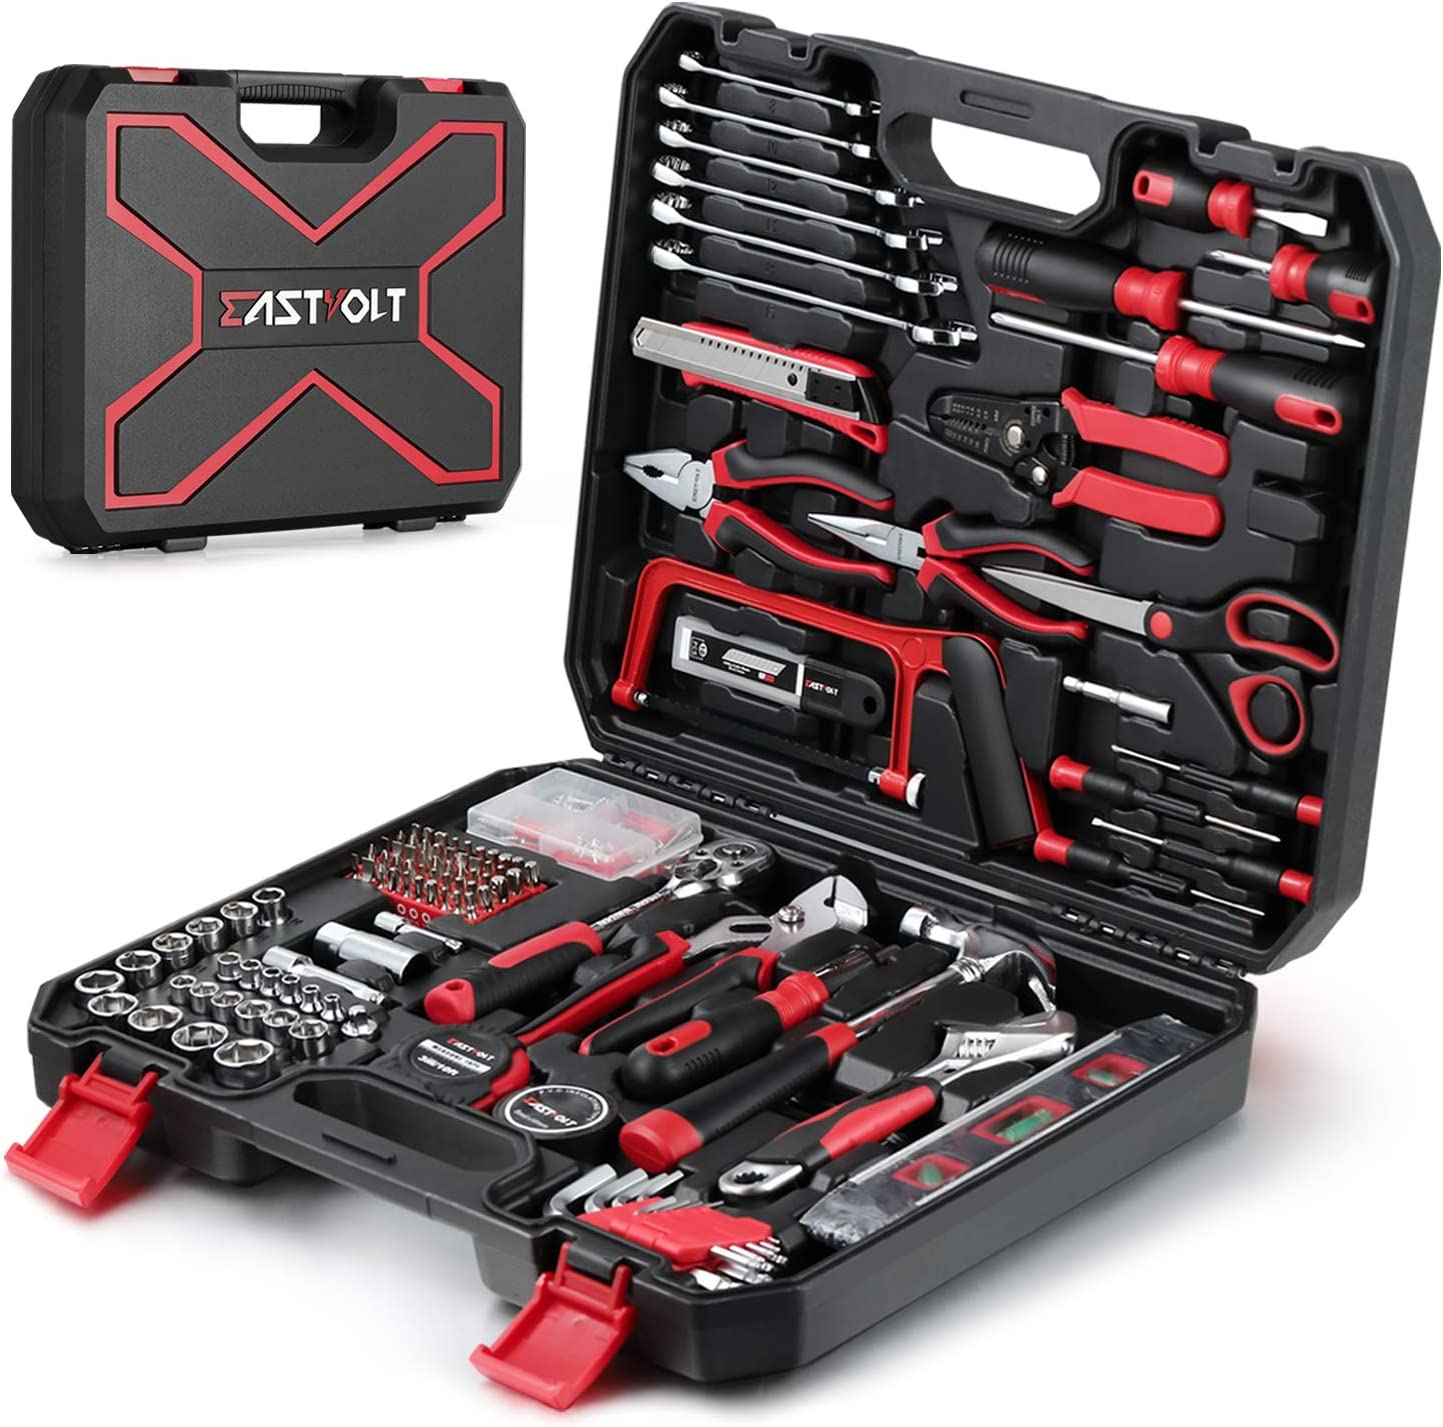 Eastvolt 218-Piece Household Tool Kit